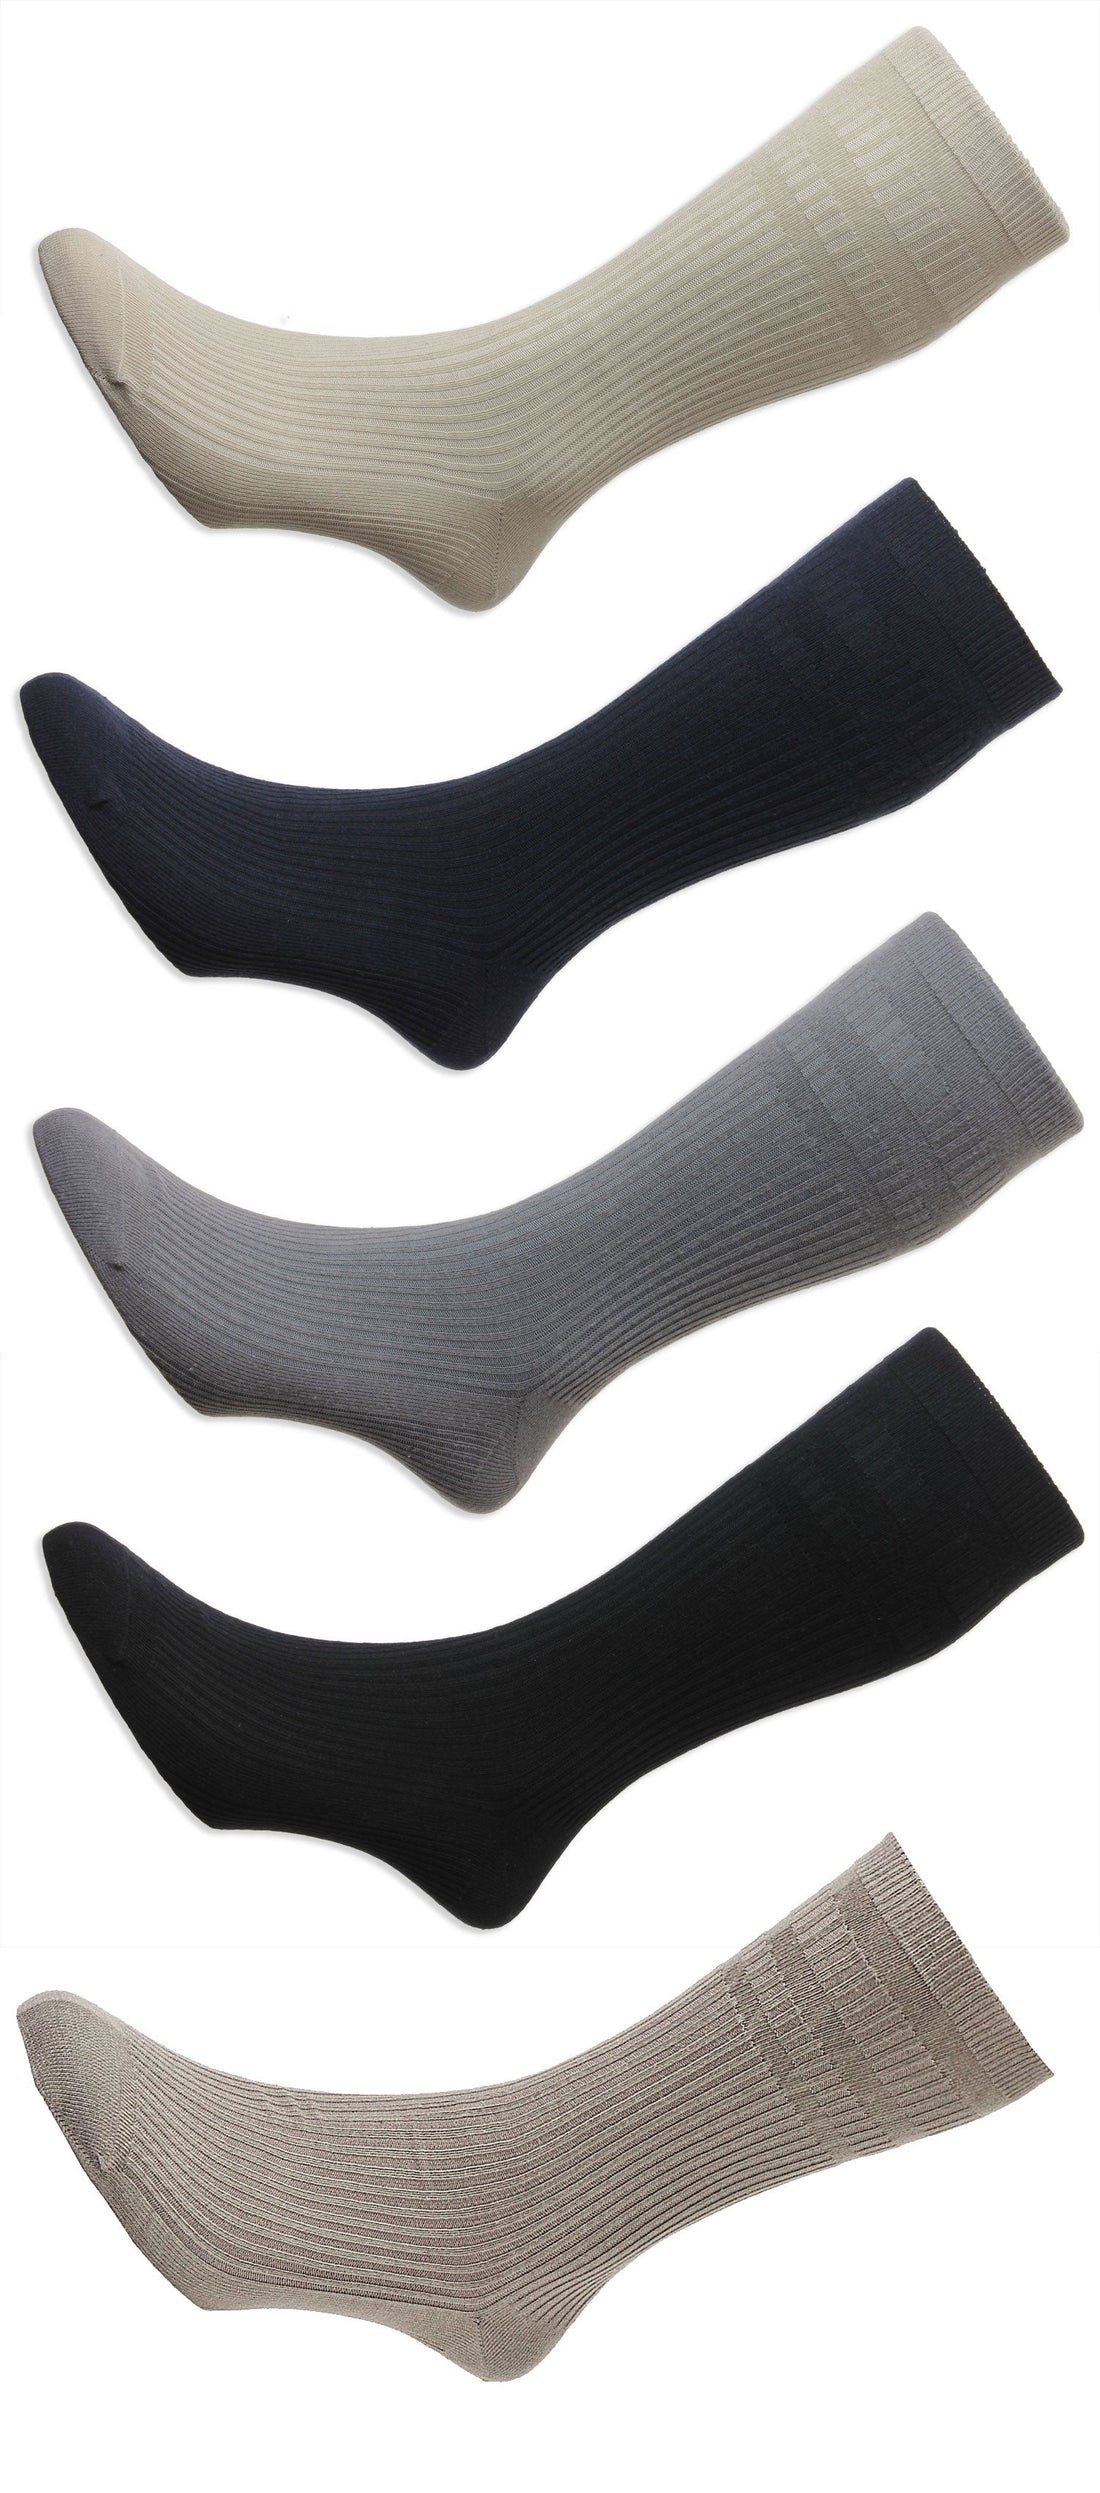 HJ Hall Extra Wide Soft Top Sock | Sanitised Cotton | Black, Mink, Grey, Navy